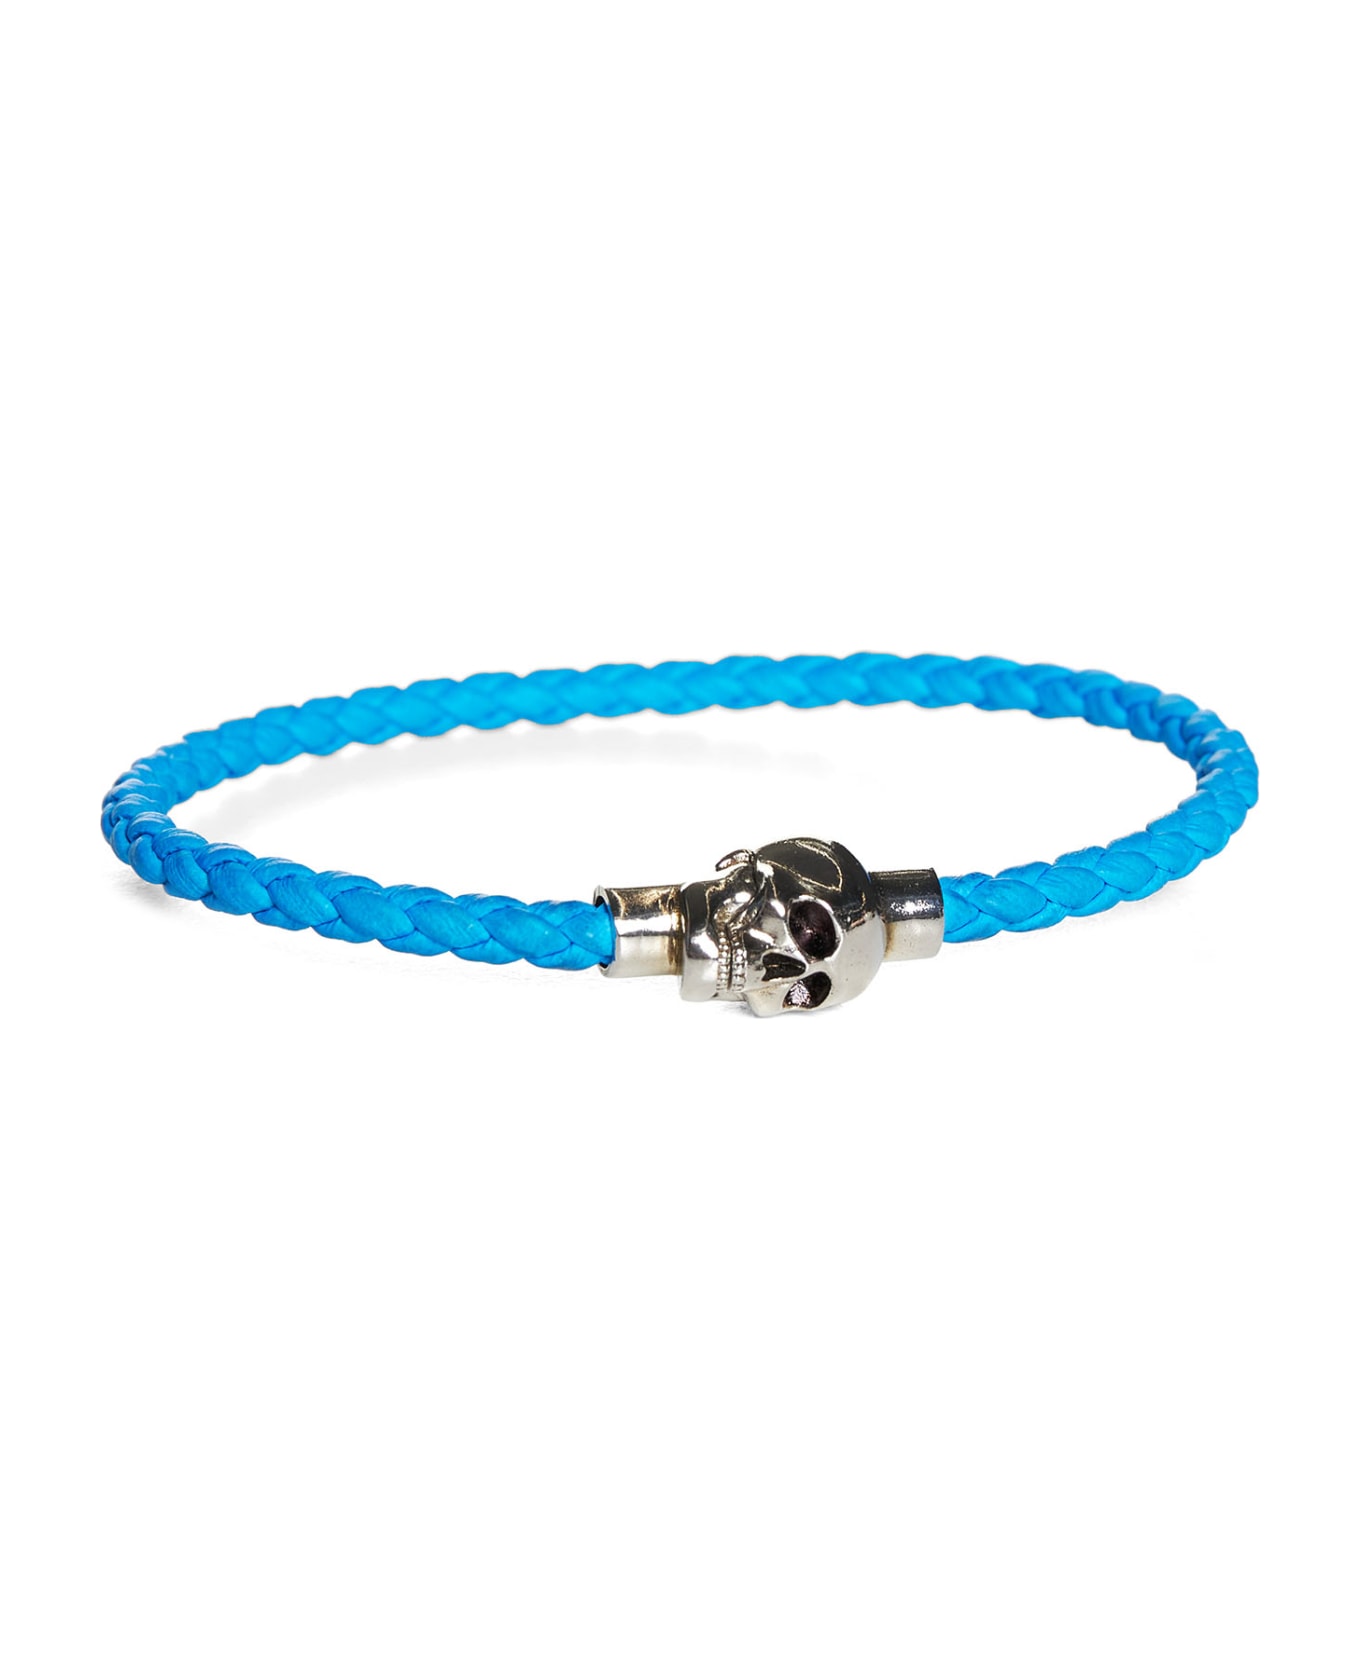 Alexander McQueen Bracelet - A.silver/elect.blue